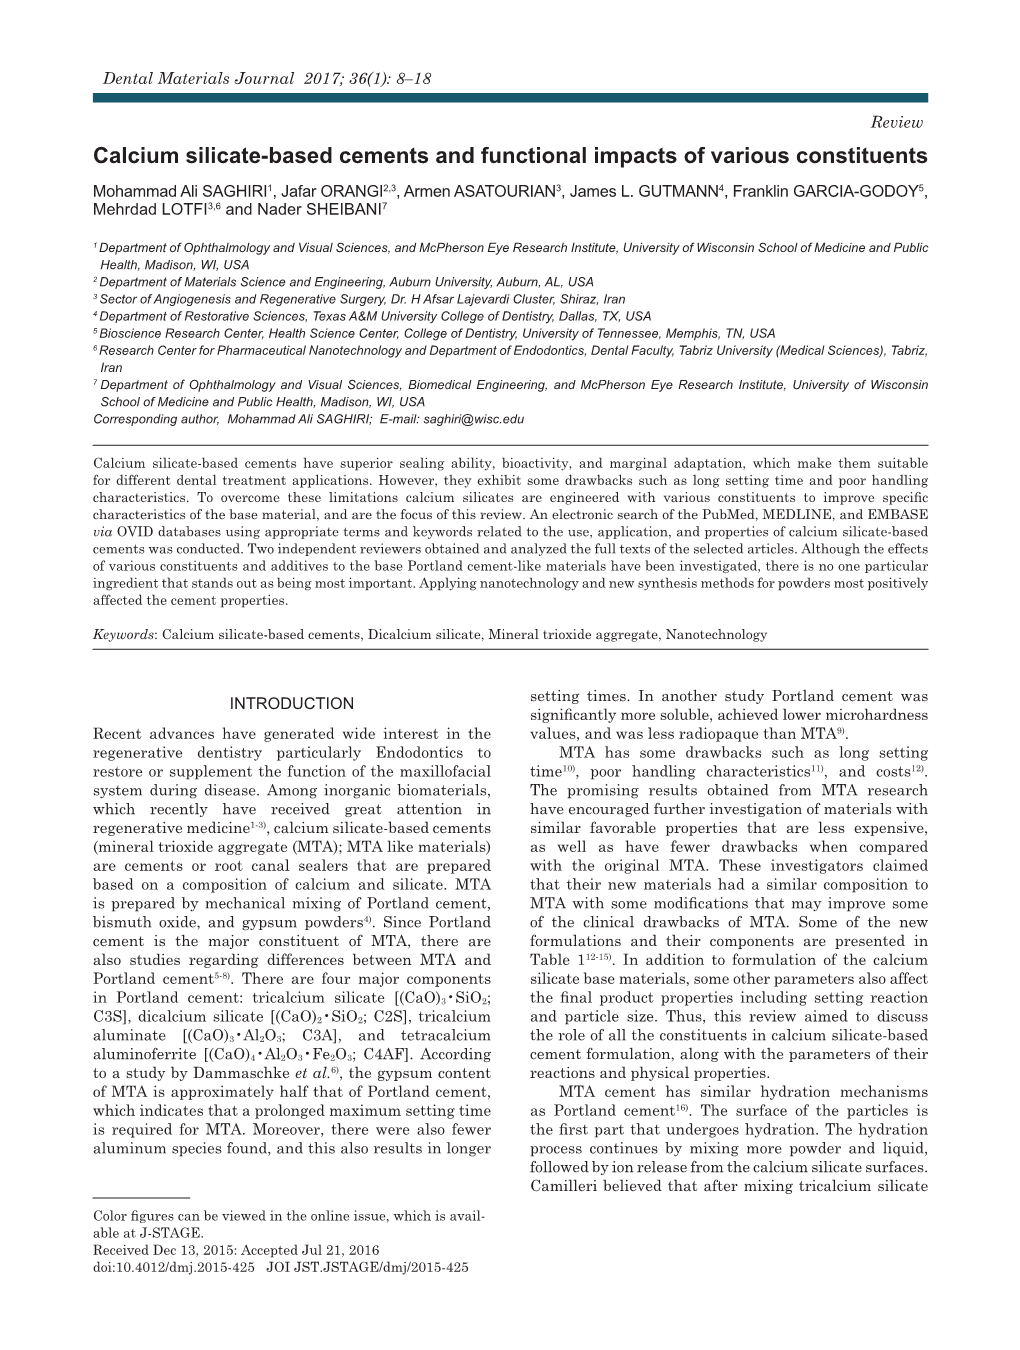 Calcium Silicate-Based Cements and Functional Impacts of Various Constituents Mohammad Ali SAGHIRI1, Jafar ORANGI2,3, Armen ASATOURIAN3, James L